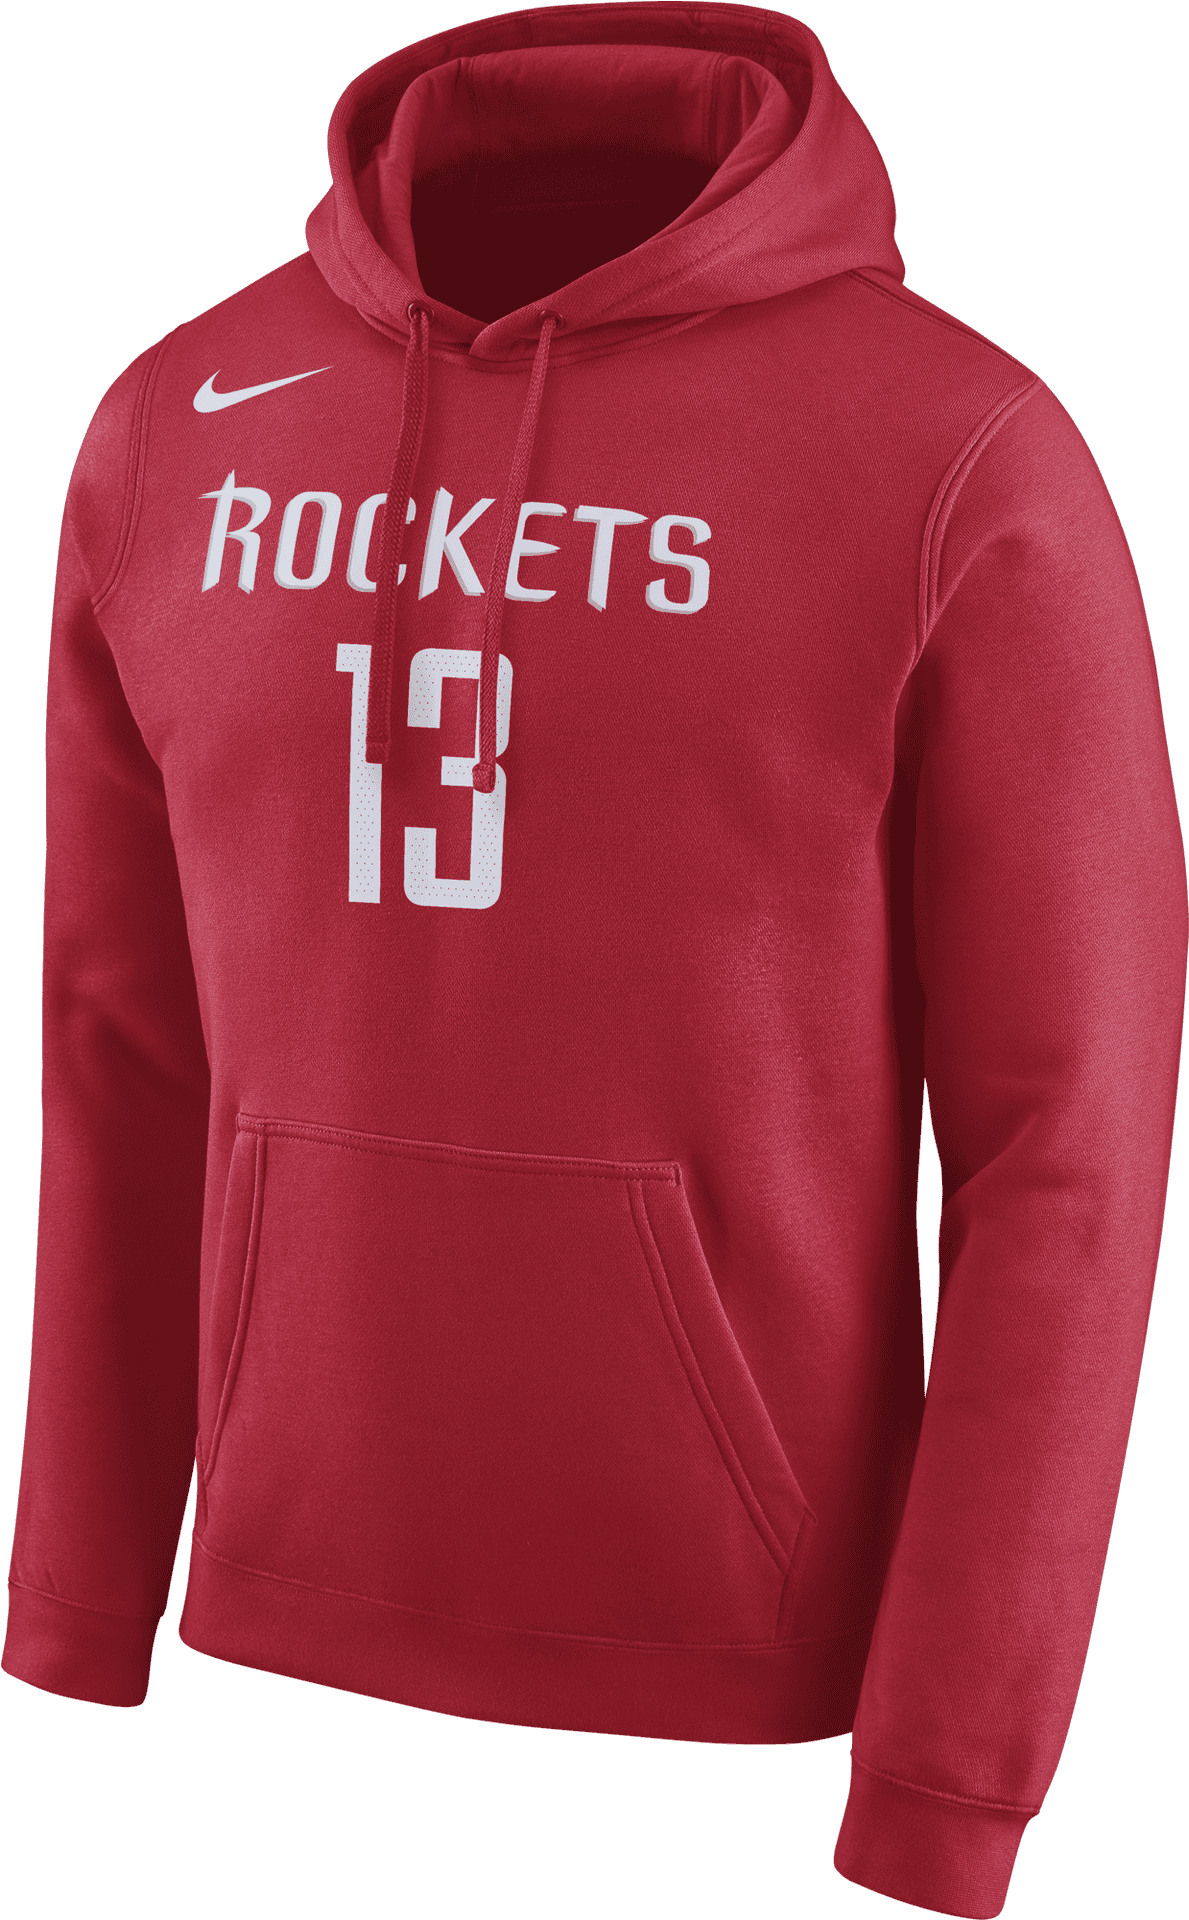 Houston Rockets13 Red Hoodie Nike PNG image